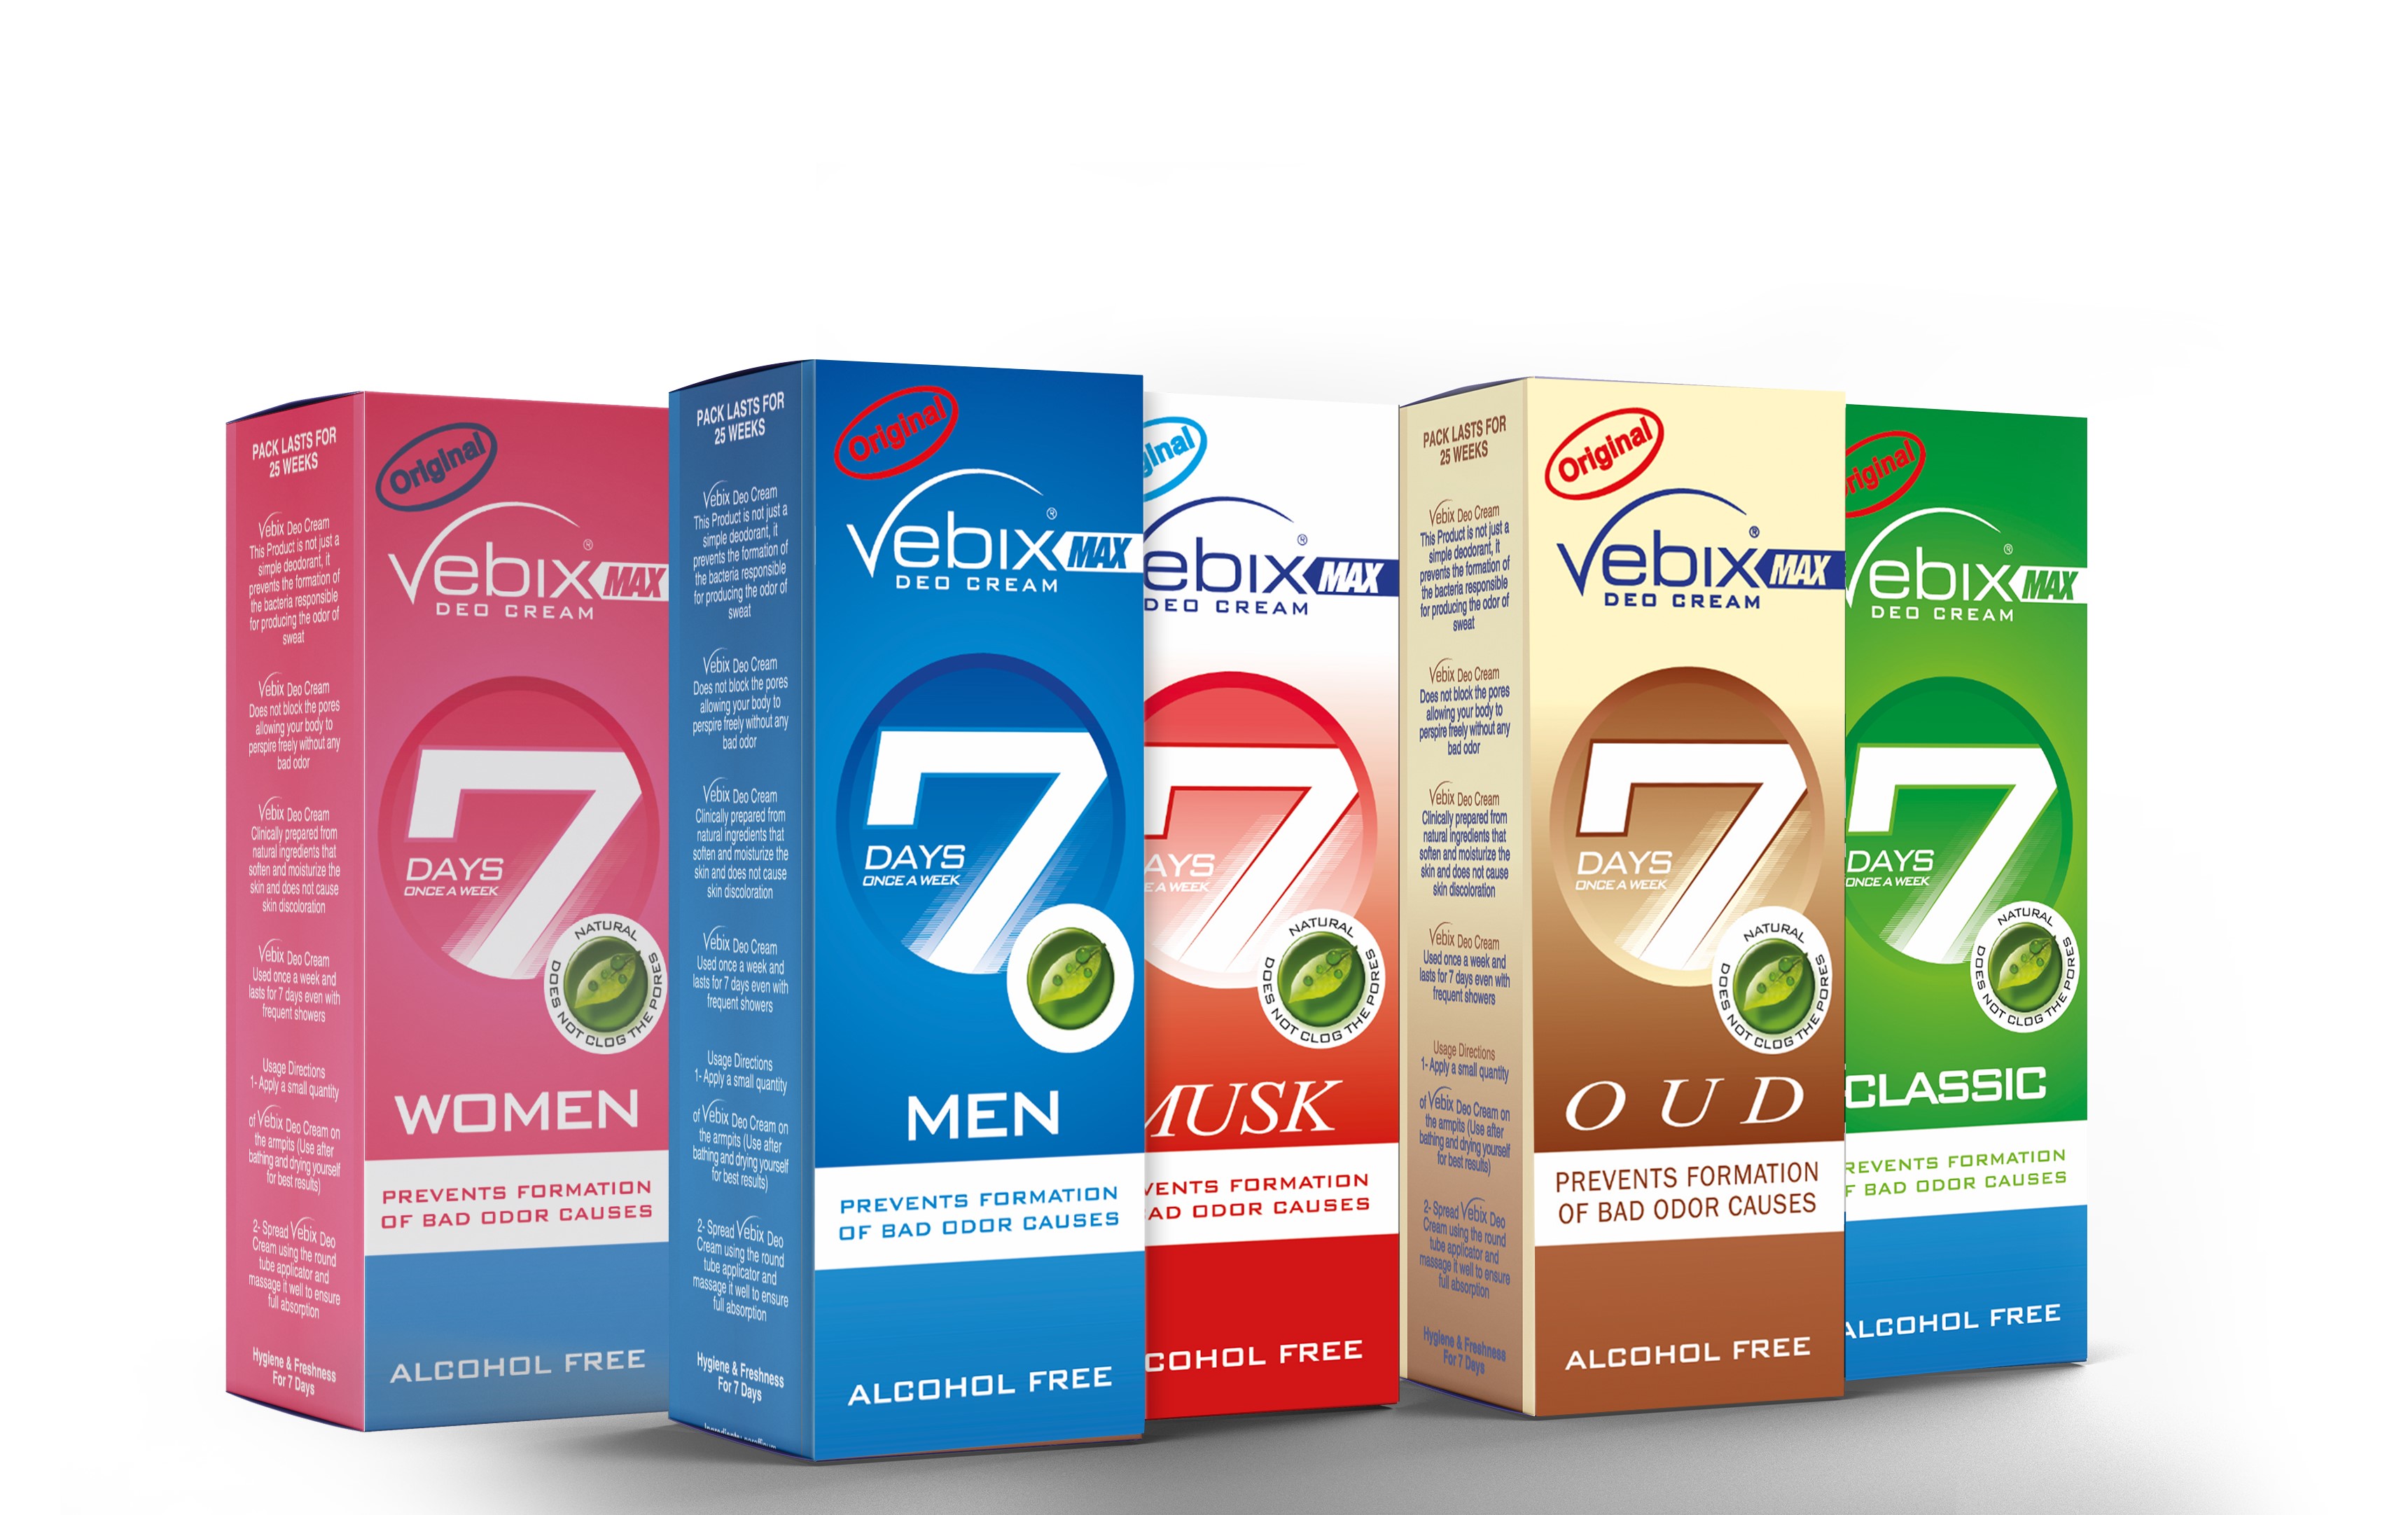 Vebix deodorant from MPG